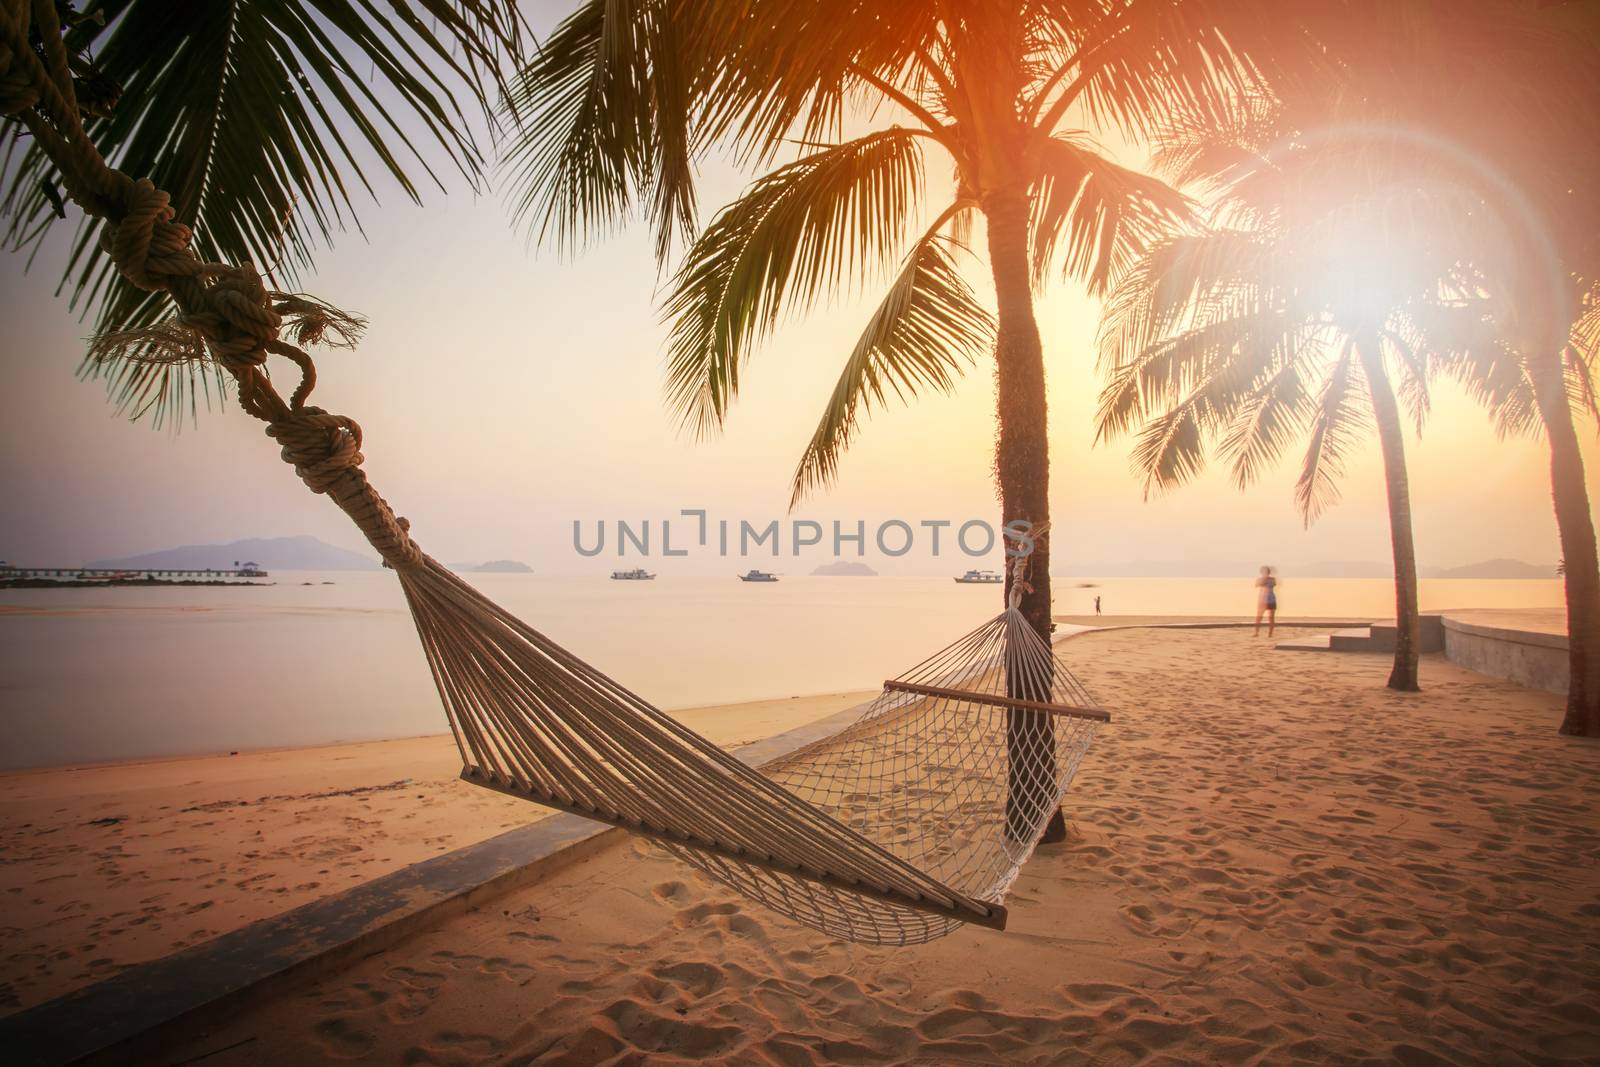  beach cradle on coconut tree against beautiful sun set sky summ by khunaspix